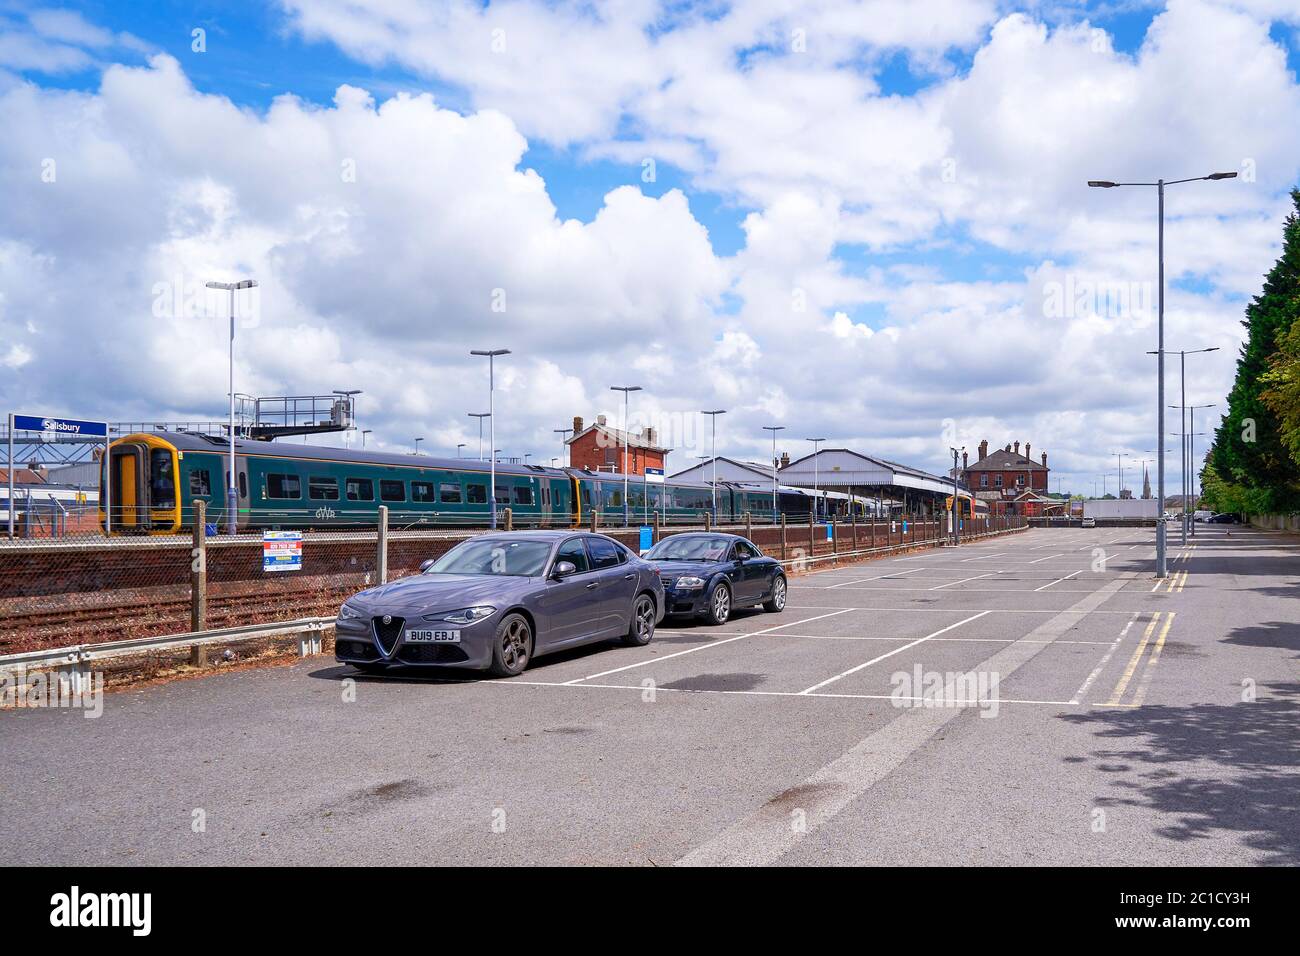 Empty railway station car park during Coronavirus lockdown restrictions Stock Photo